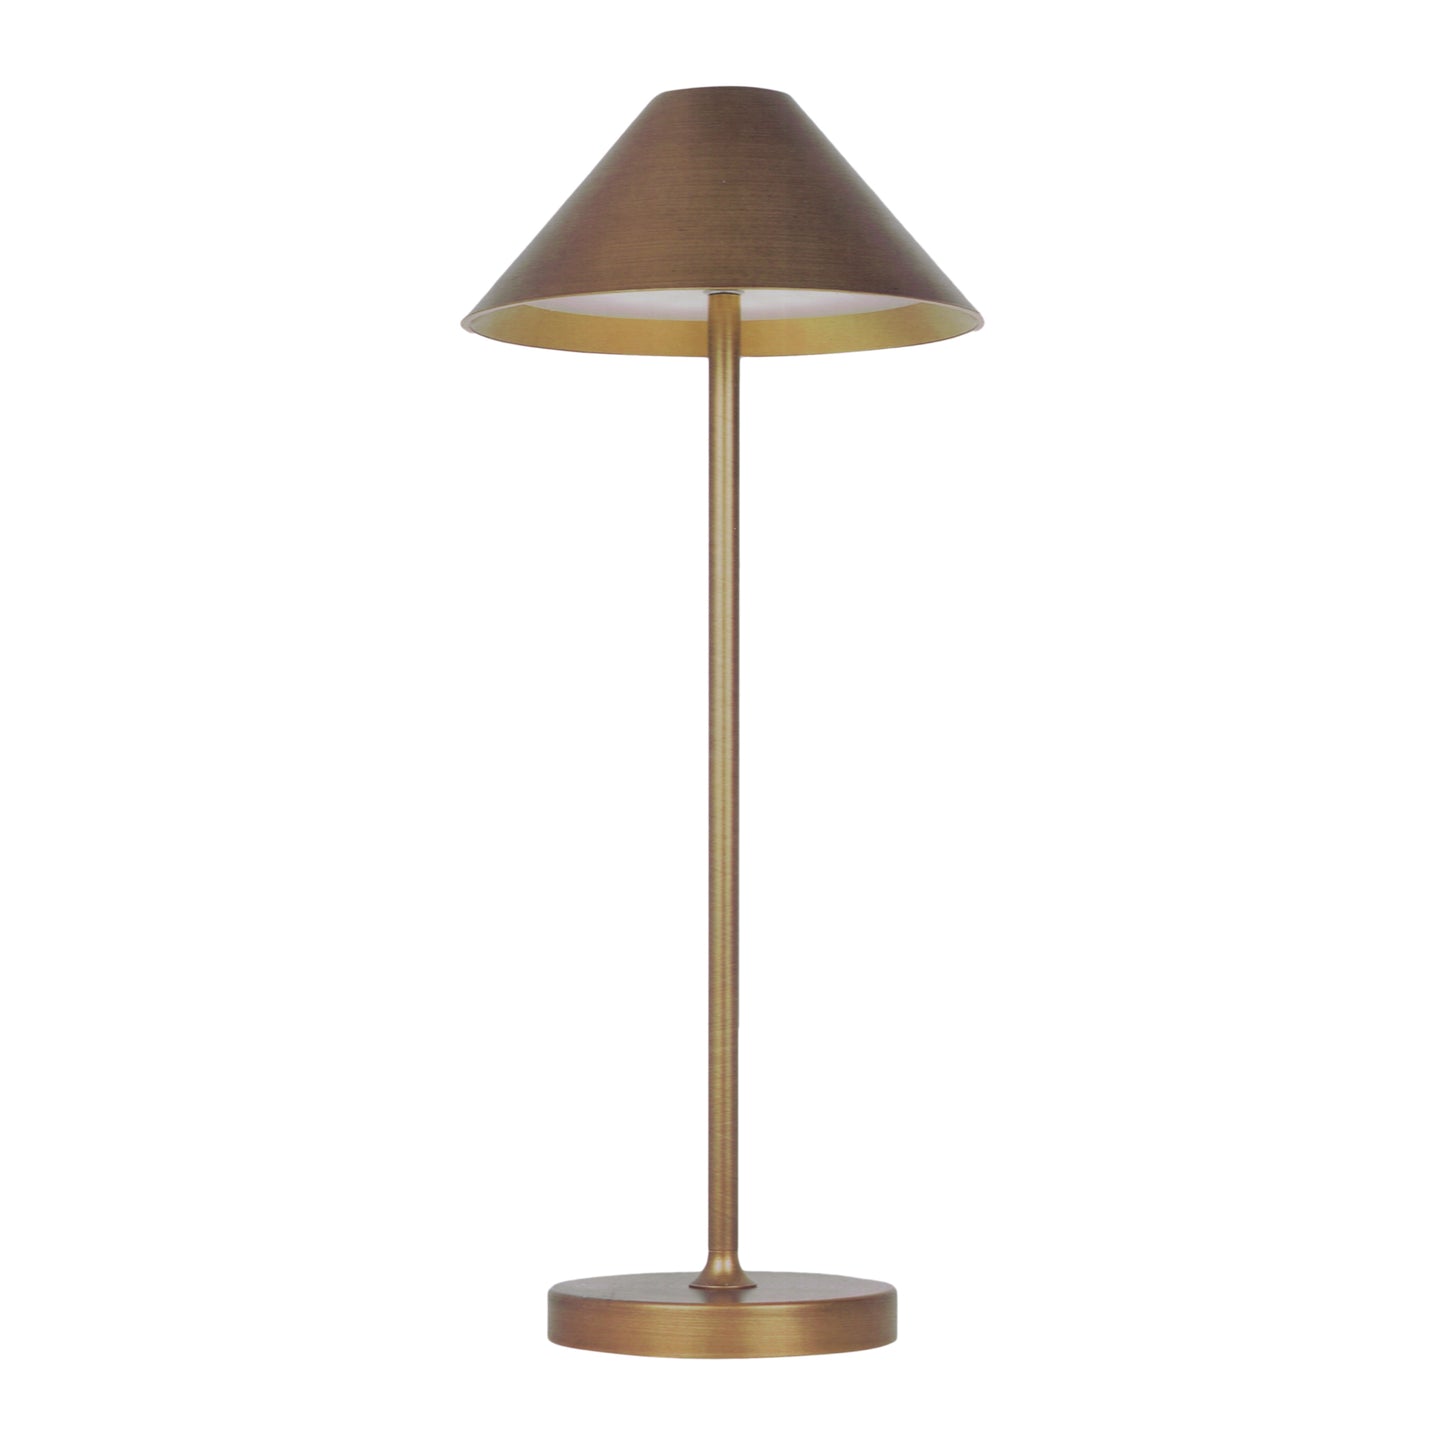 Kelù Lampada LED da tavolo senza fili, lampada portatile per esterni, a batteria usb ricaricabile, H35 cm oro